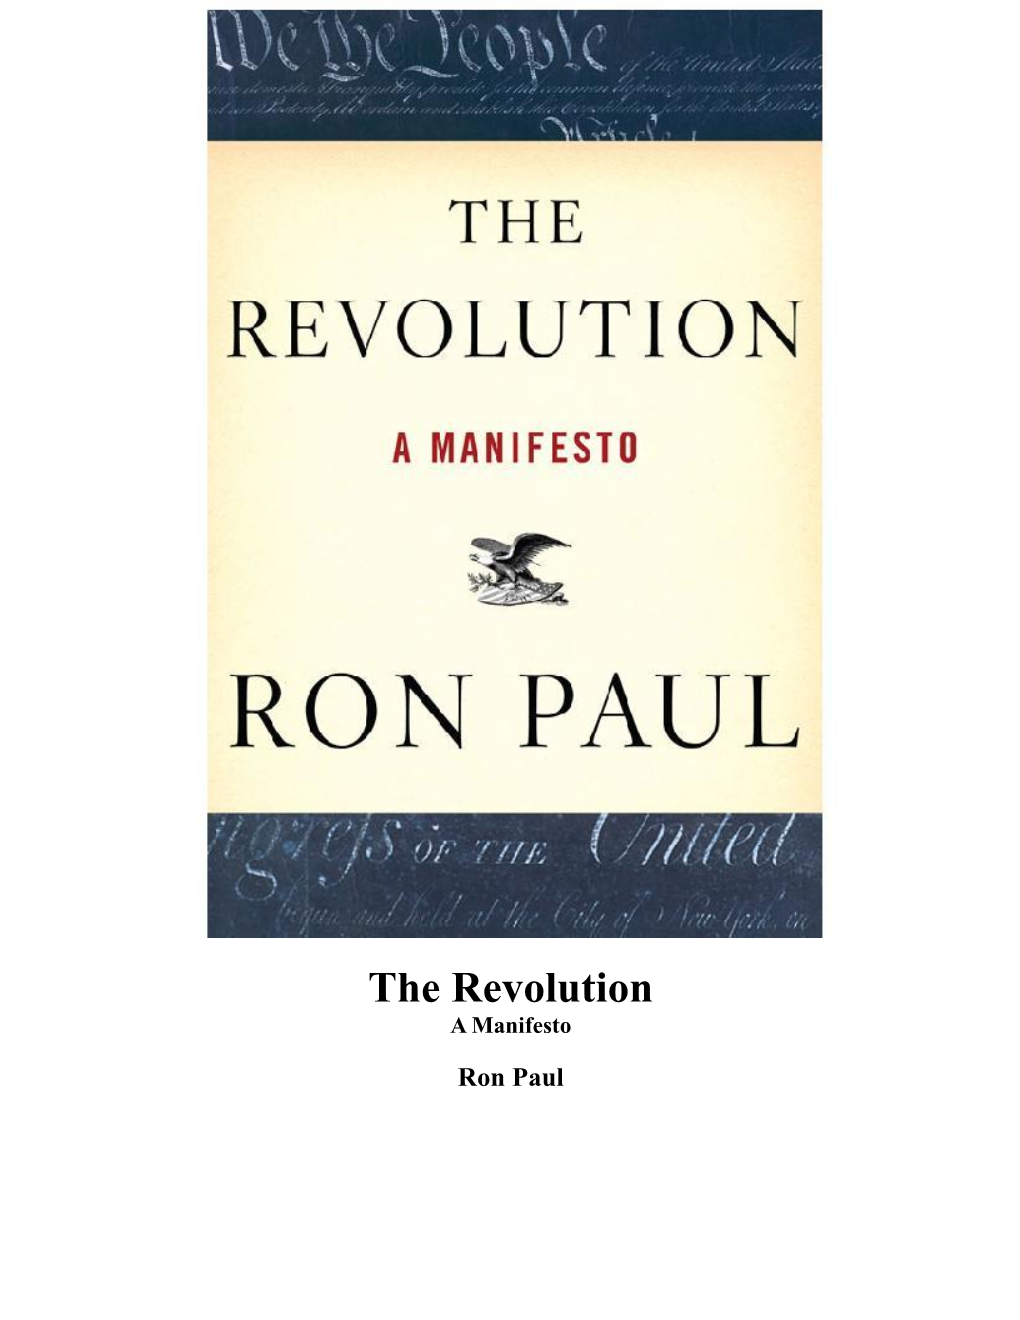 The Revolution a Manifesto